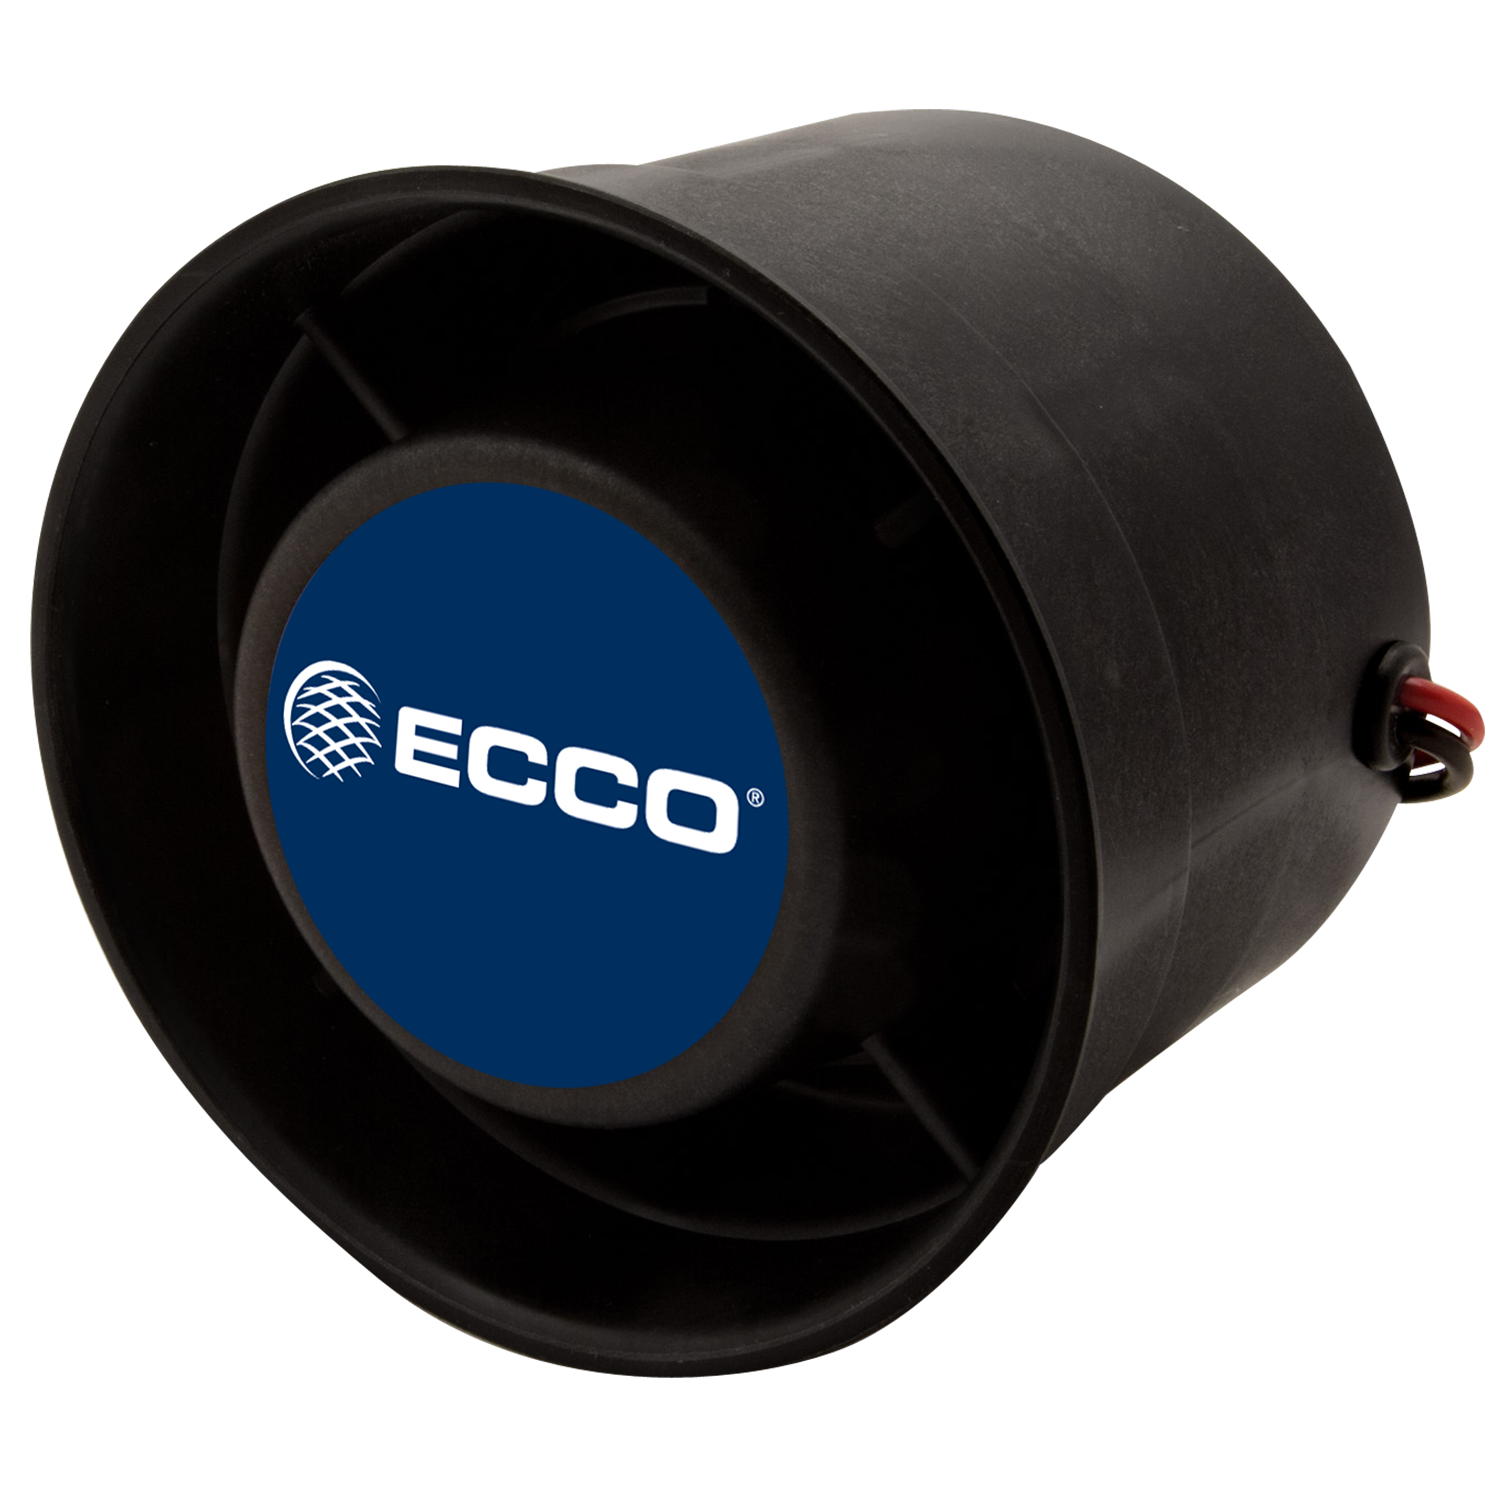 400 Series R10 LED - ECCO